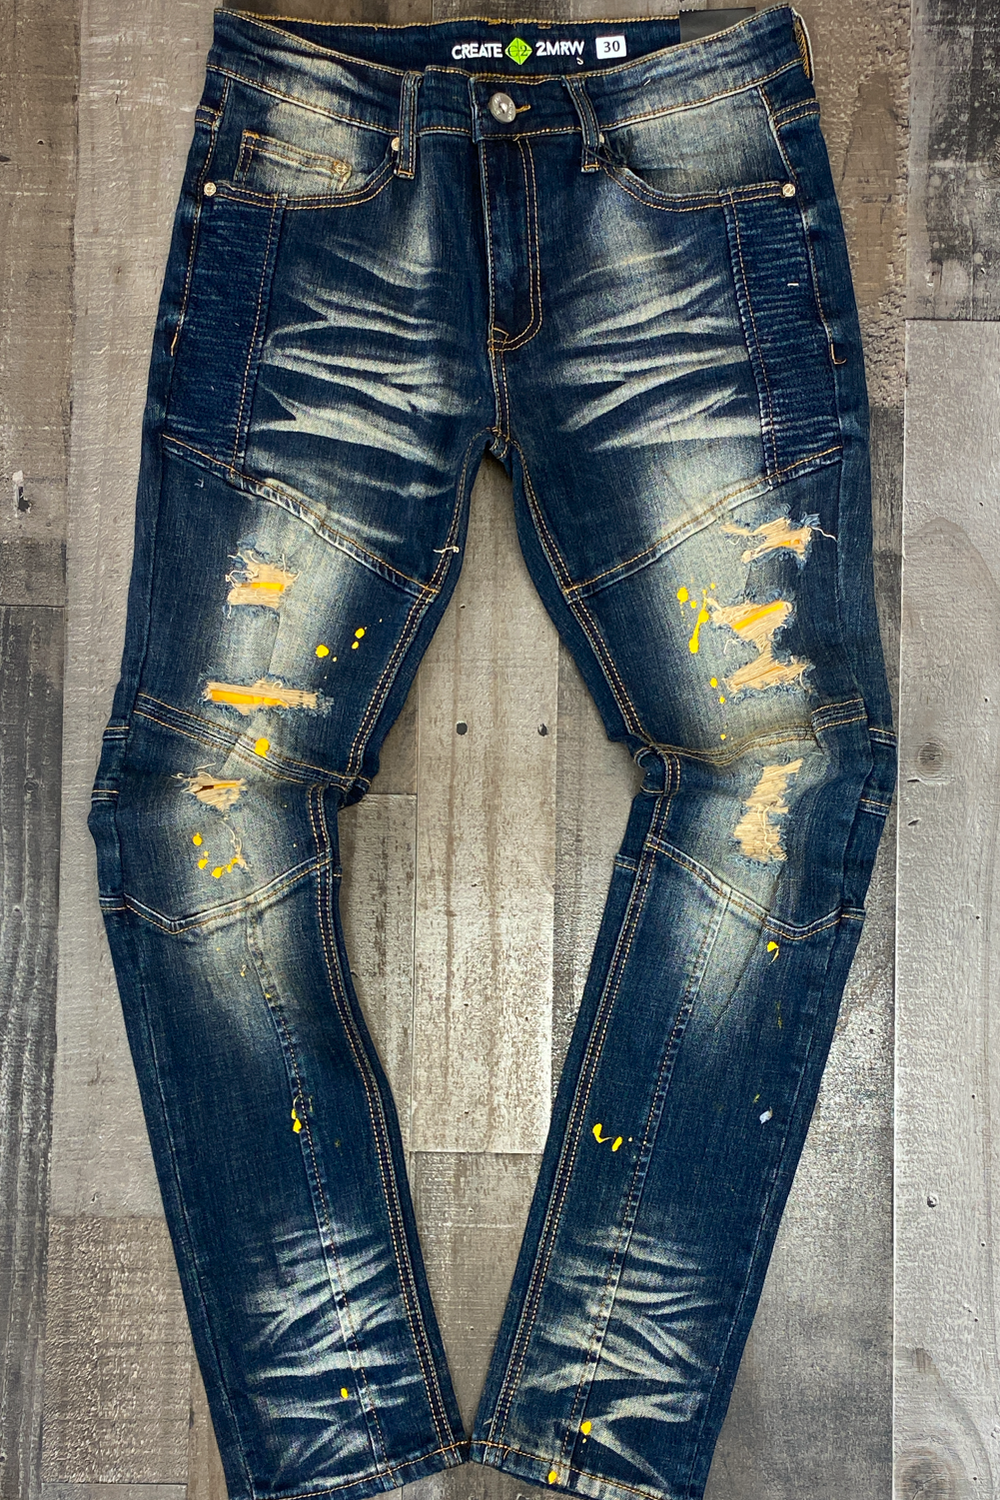 Create Tmrw- Moto color patch jeans